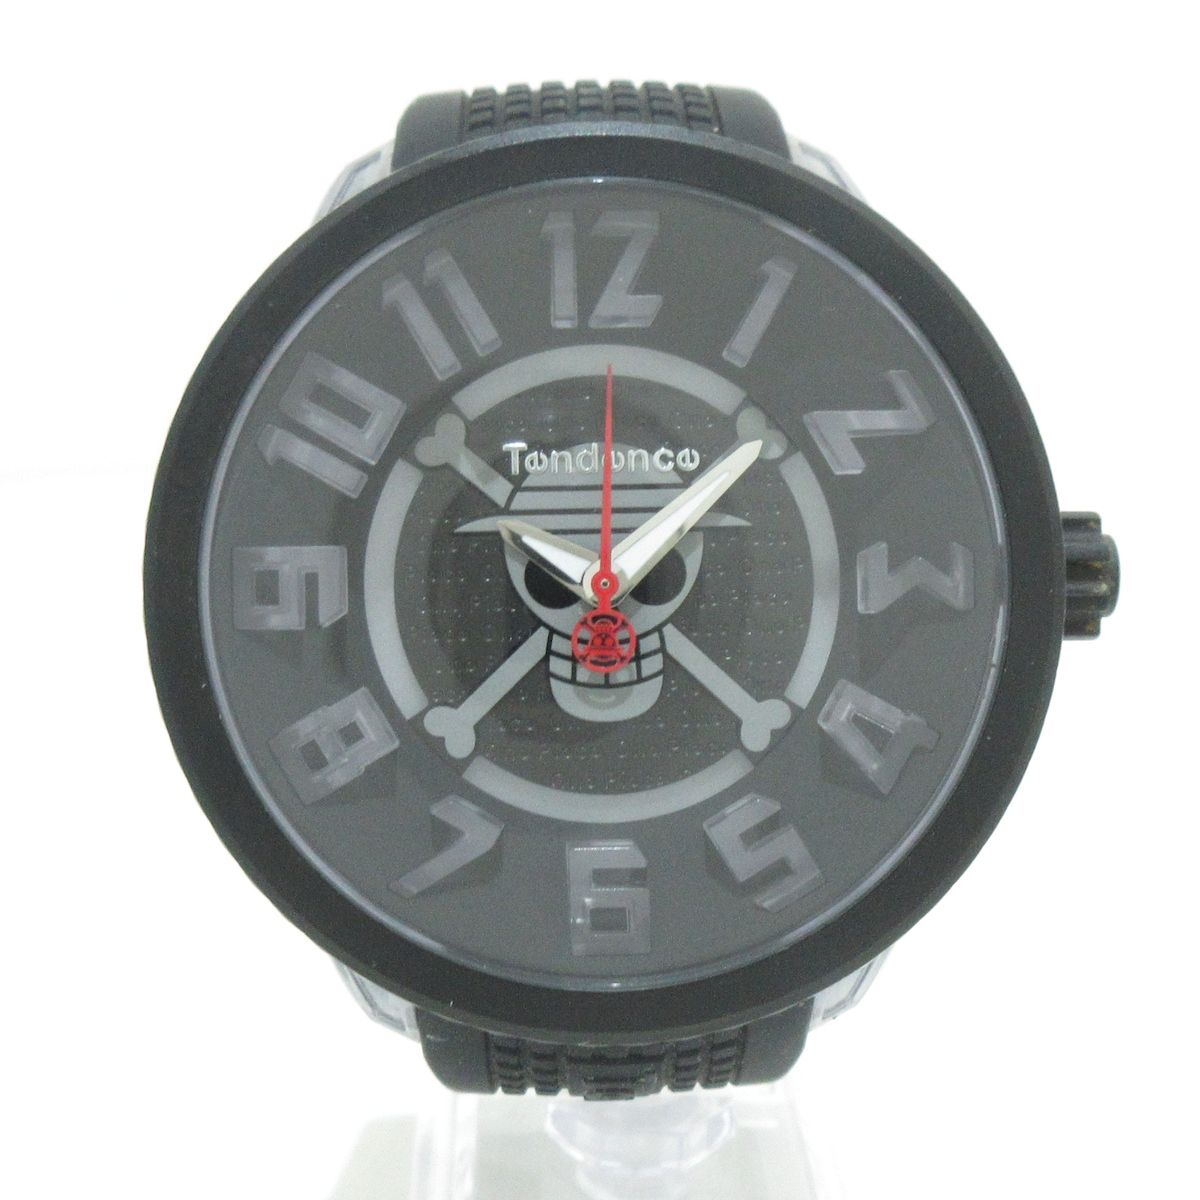 TENDENCE(テンデンス) 腕時計 - TY532009 ワンピースコラボ 黒 - メルカリ